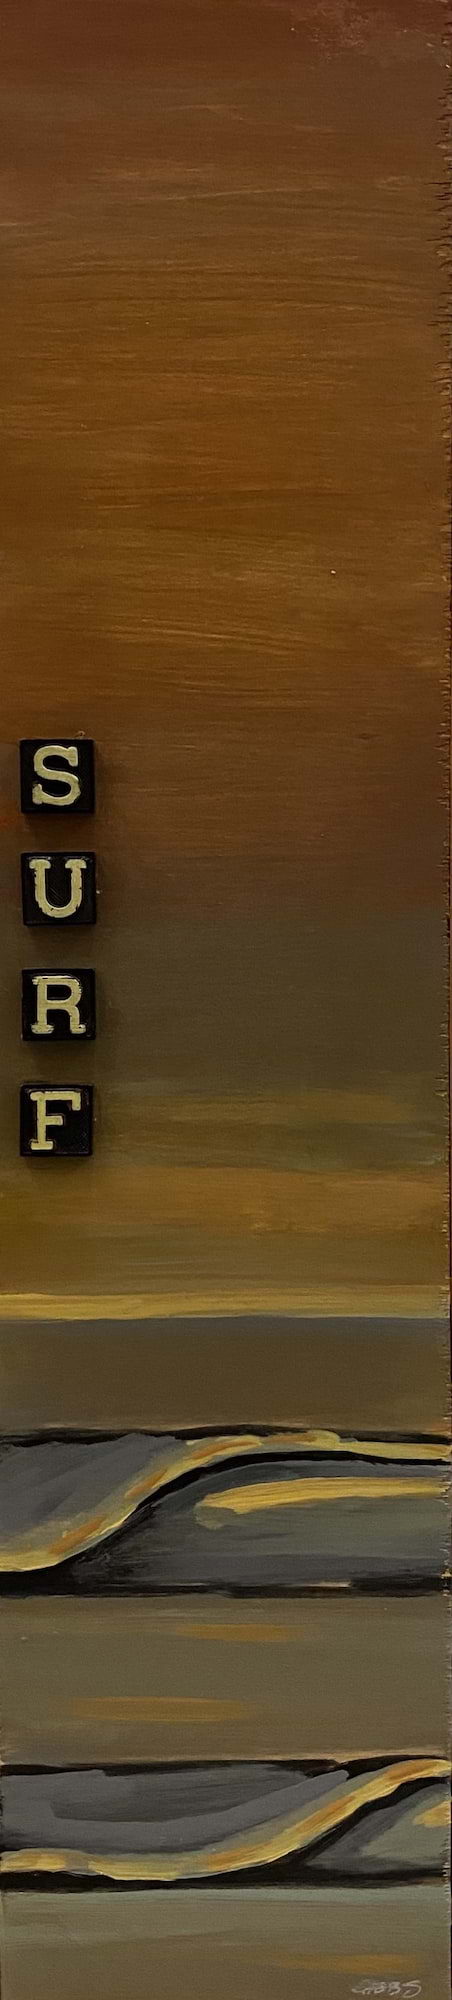 Scrabble Surf Too